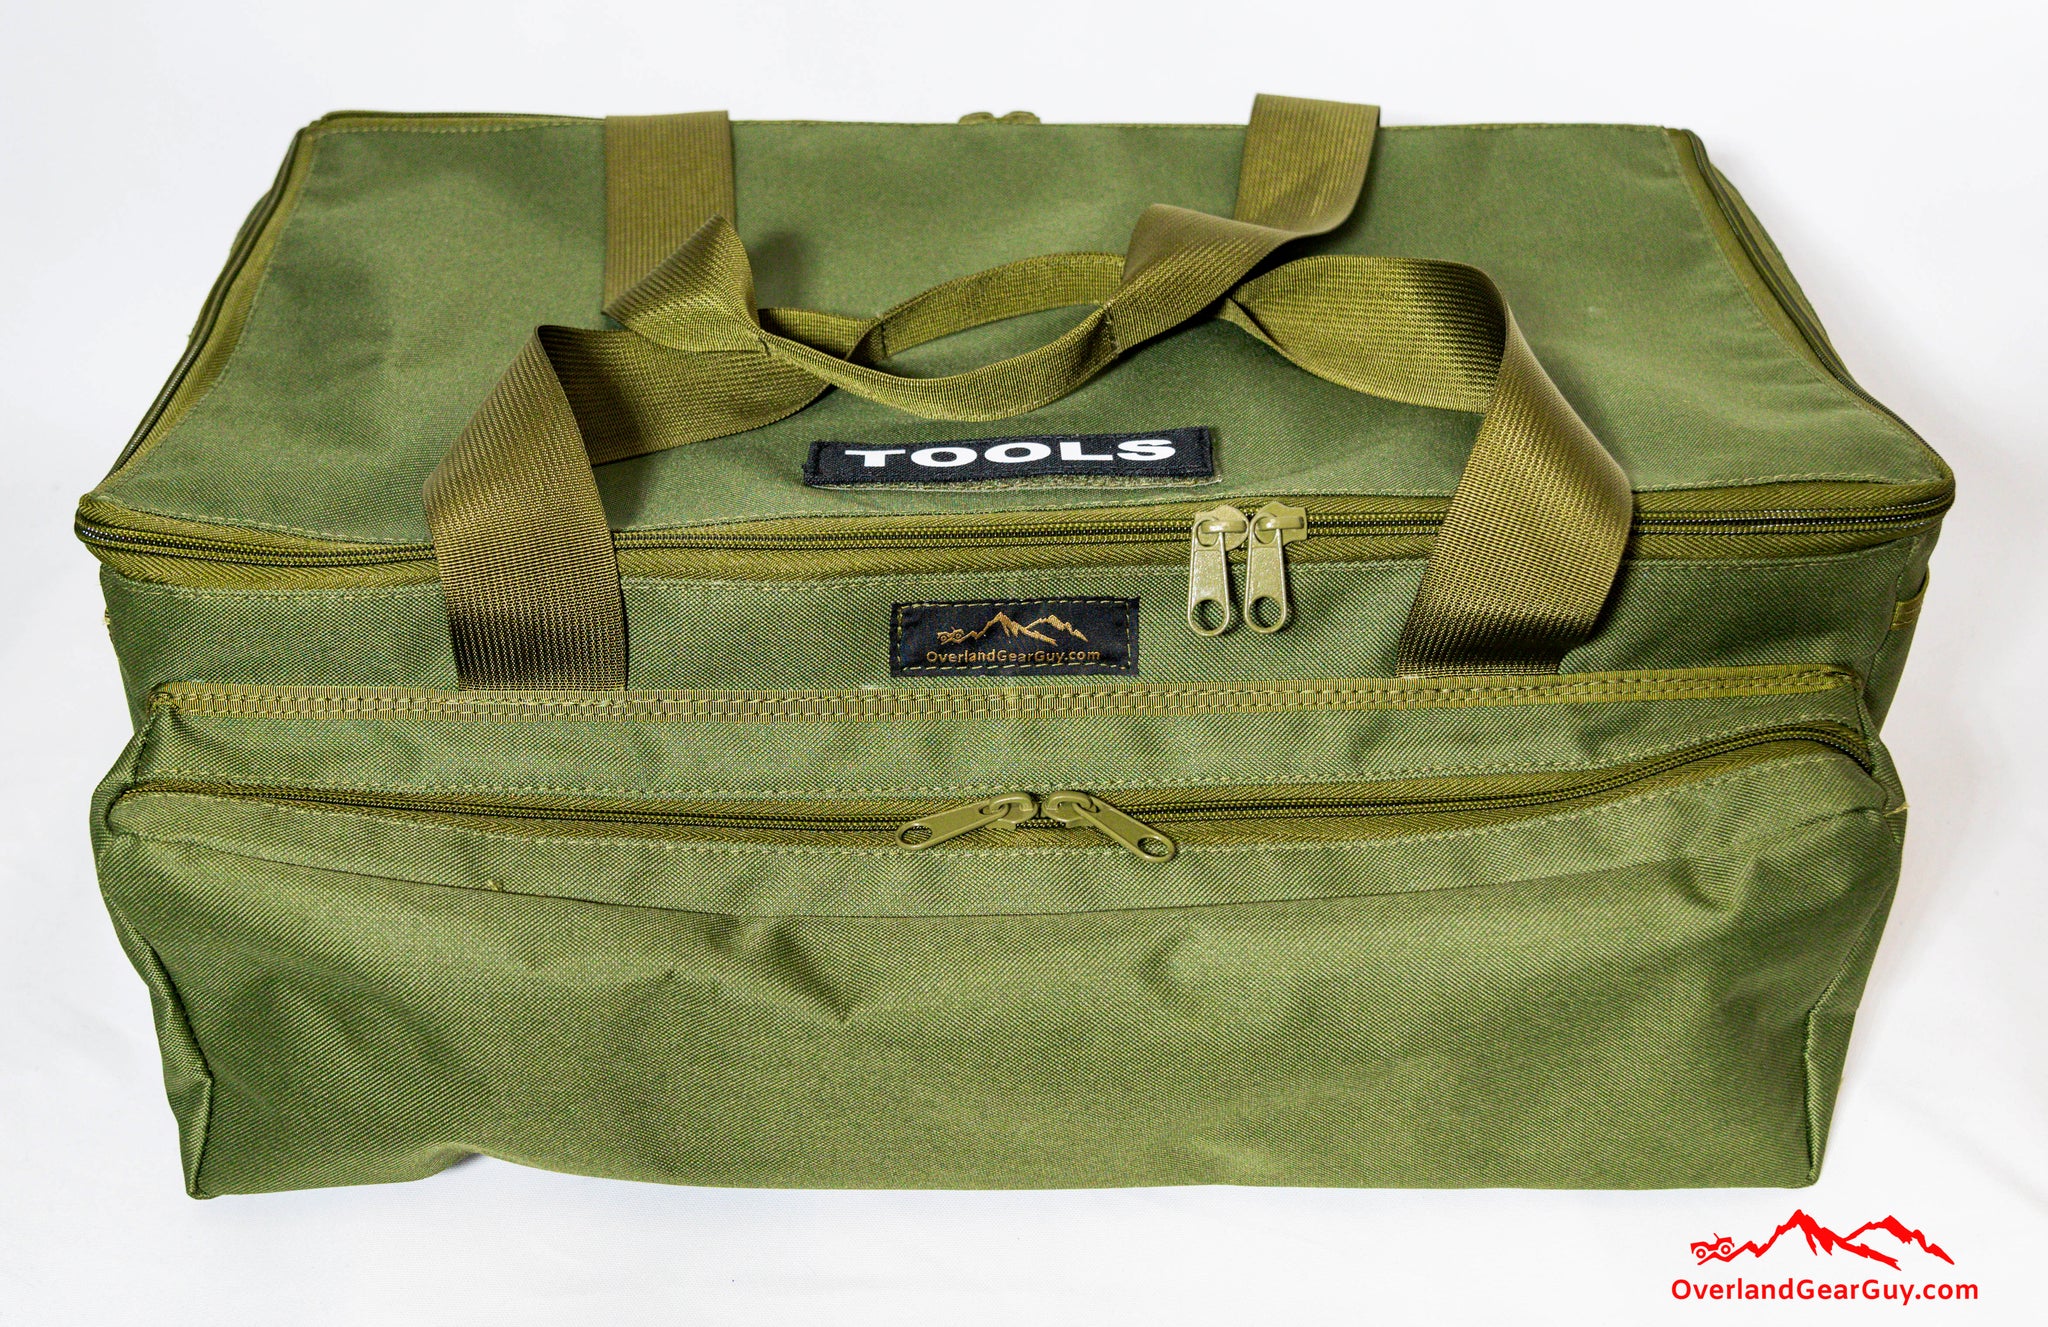  Grease Monkey Tool Backpack, Waterproof Tool Organizer &  Carrier, Black & Red Carflage (GM-22419) : Automotive